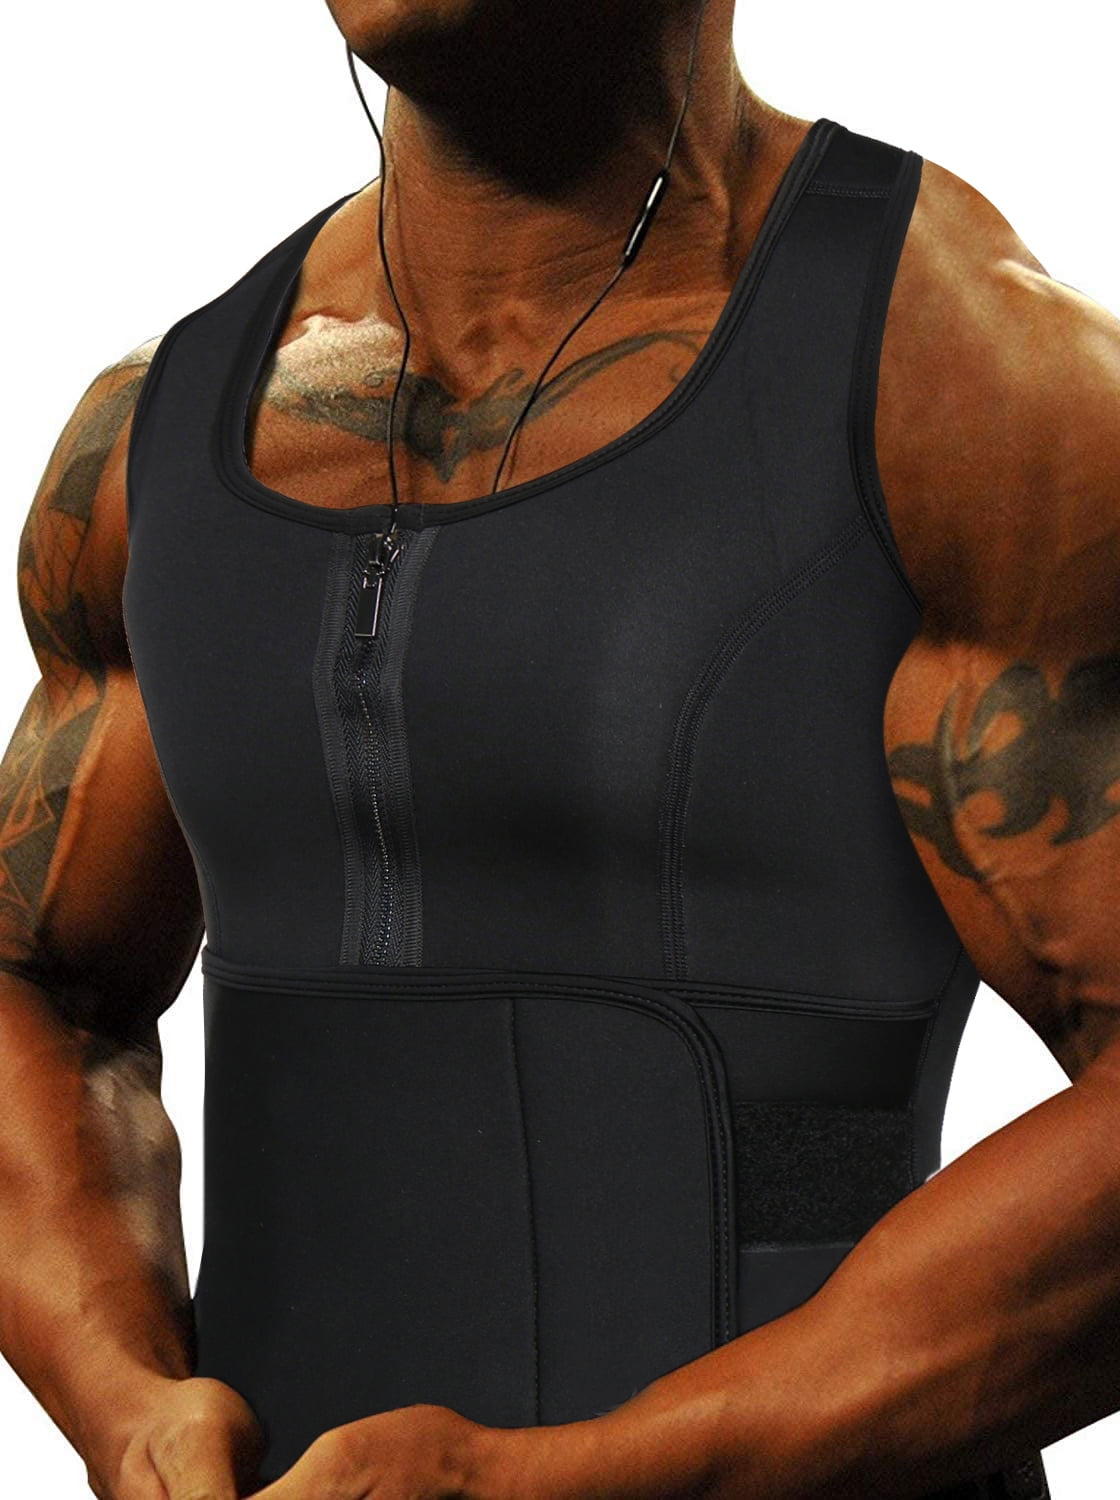 Men Women Sauna Sweat Vest Weight Loss Tank Thermal Workout Body Shaper Corset 